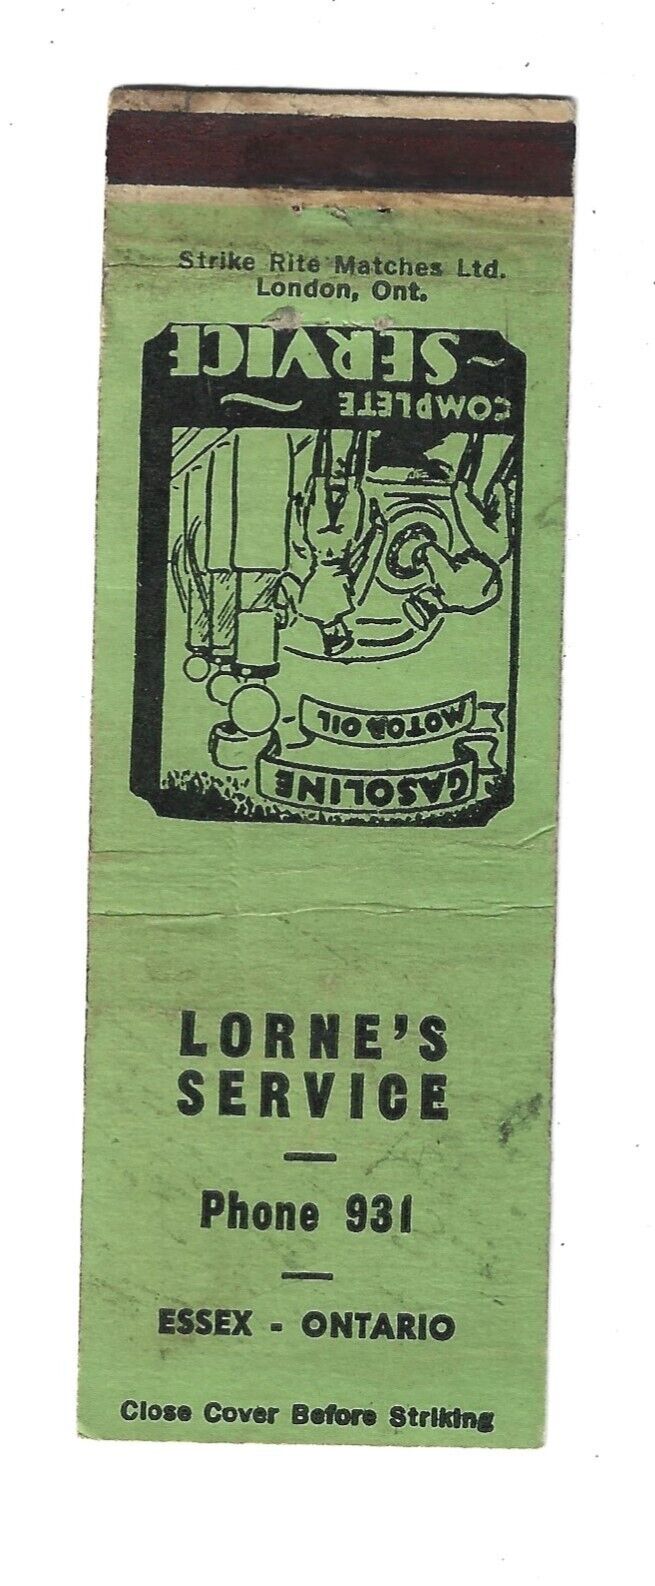 Lorne's Service / Gasoline - Essex, Ontario   Matchcover  Old Gas Pumps